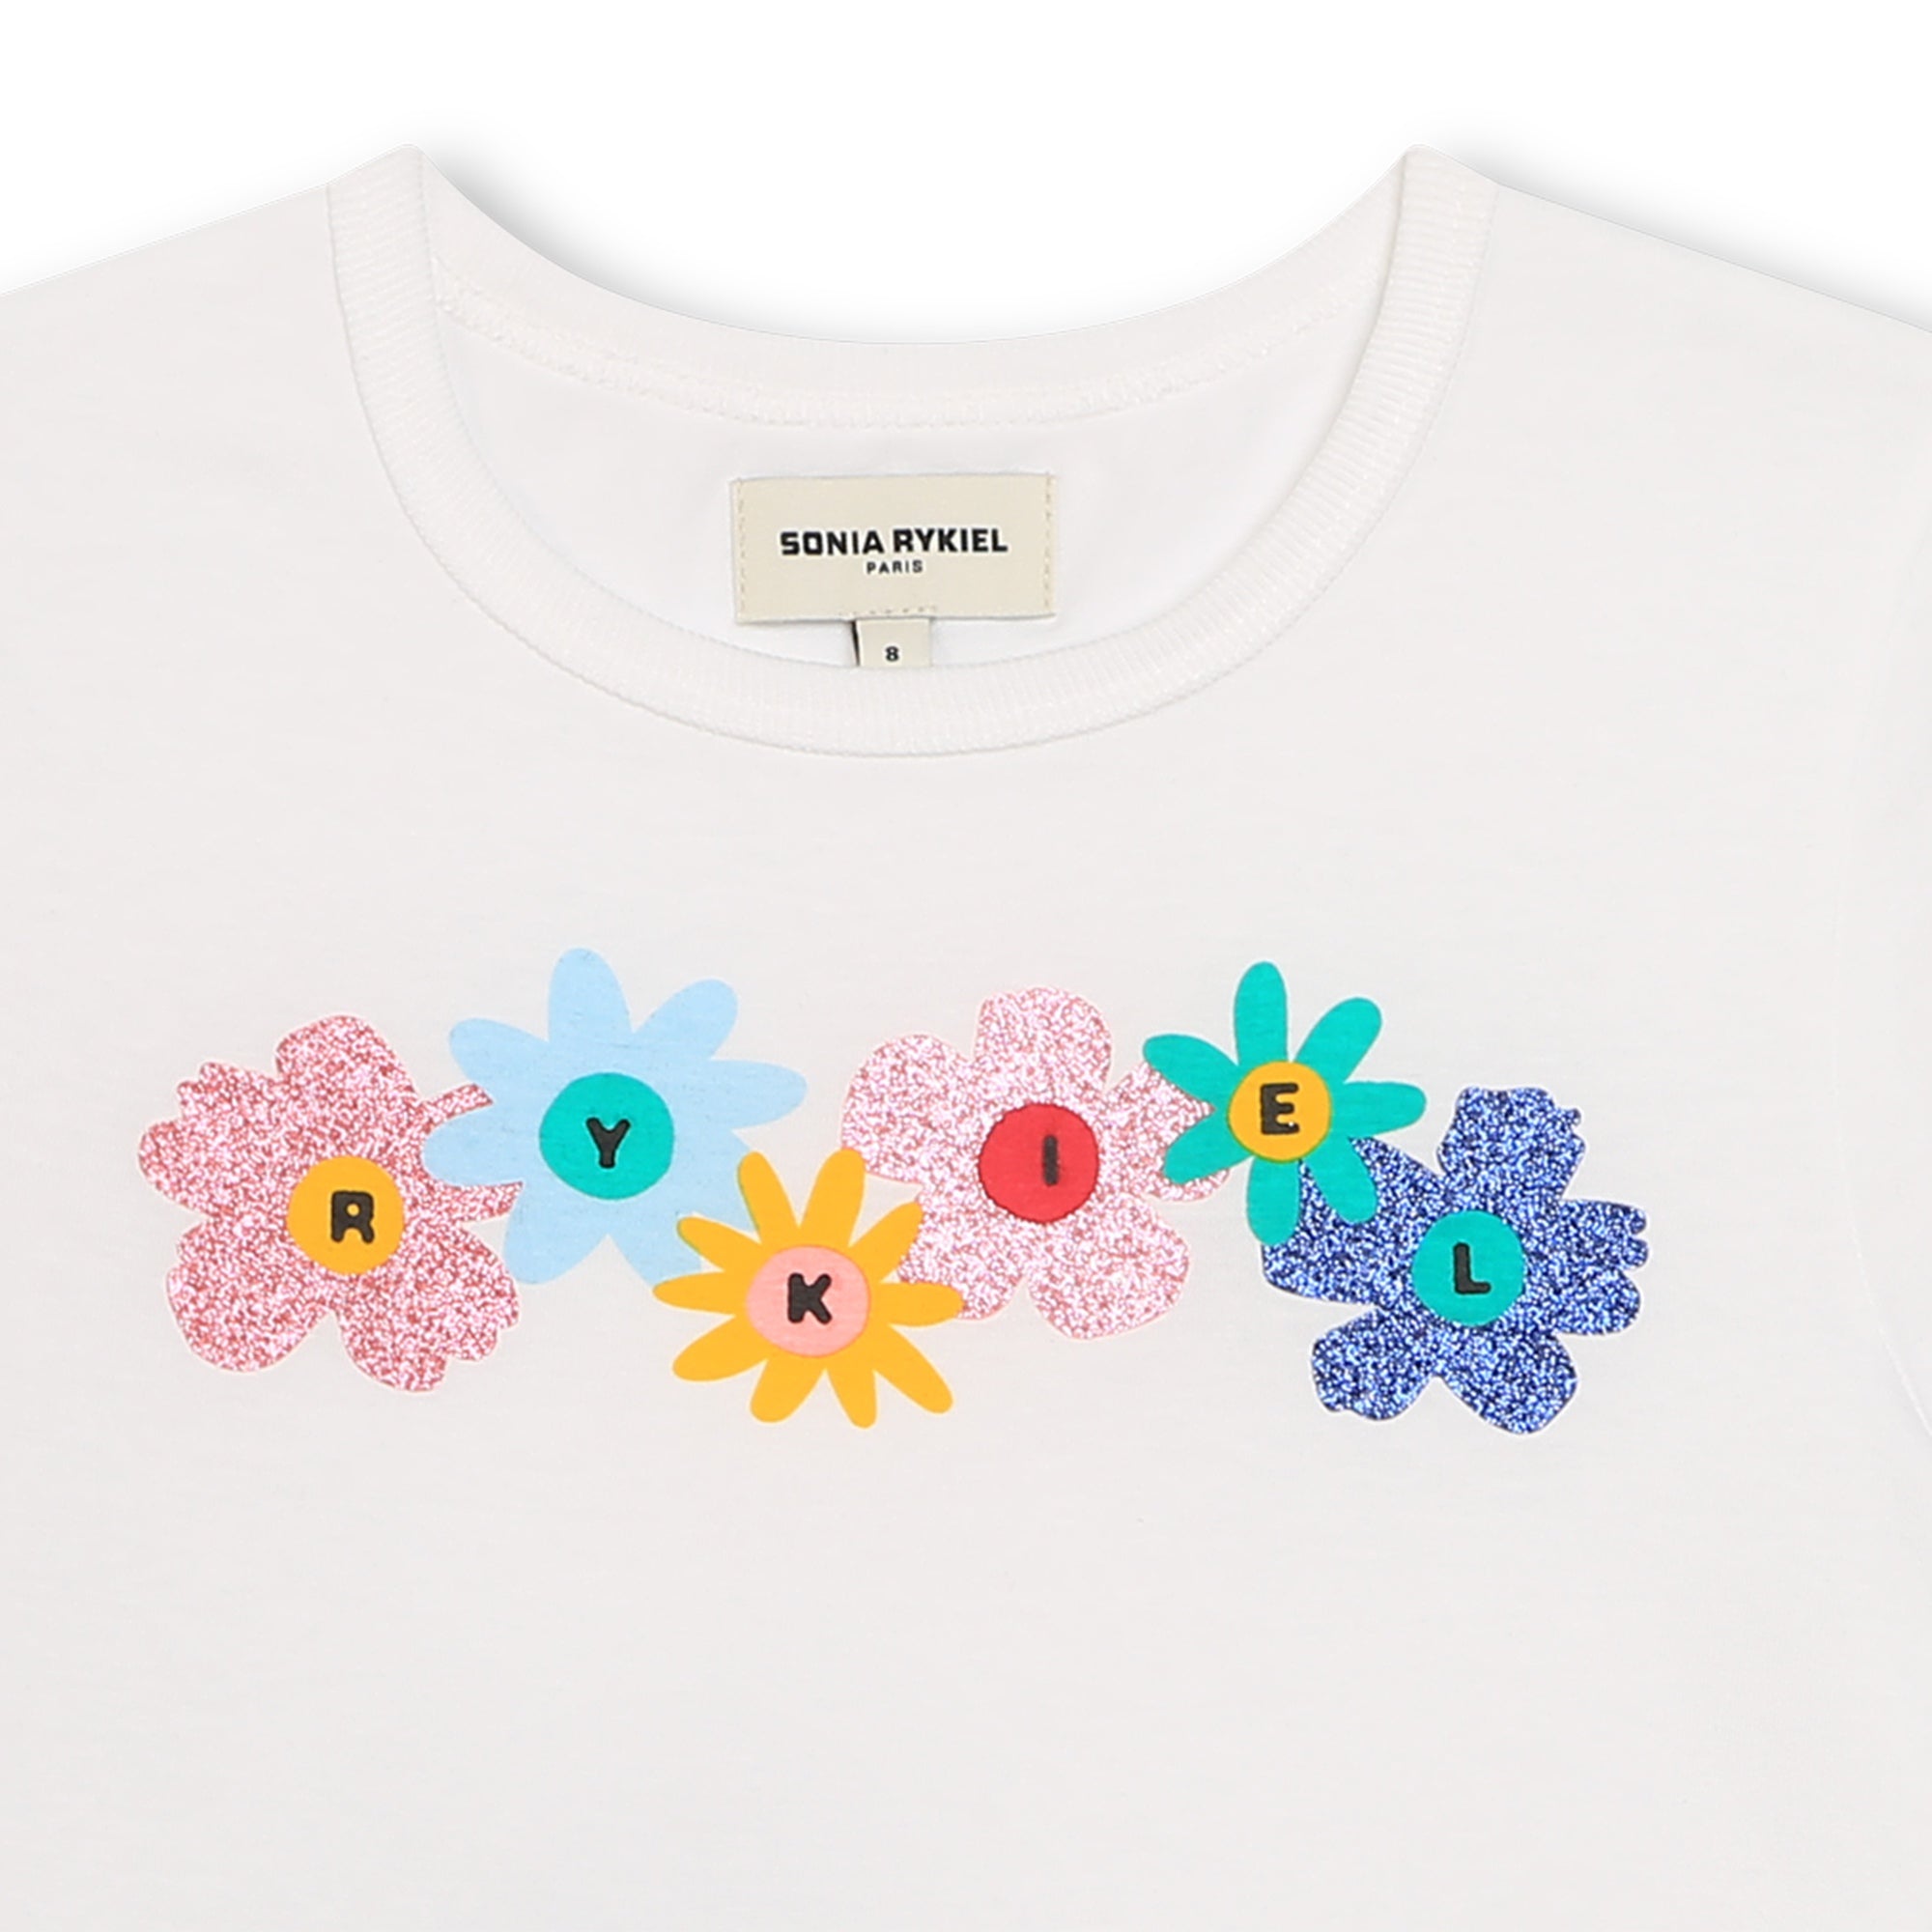 Sonia Rykiel White Flower Print Tee Shirt